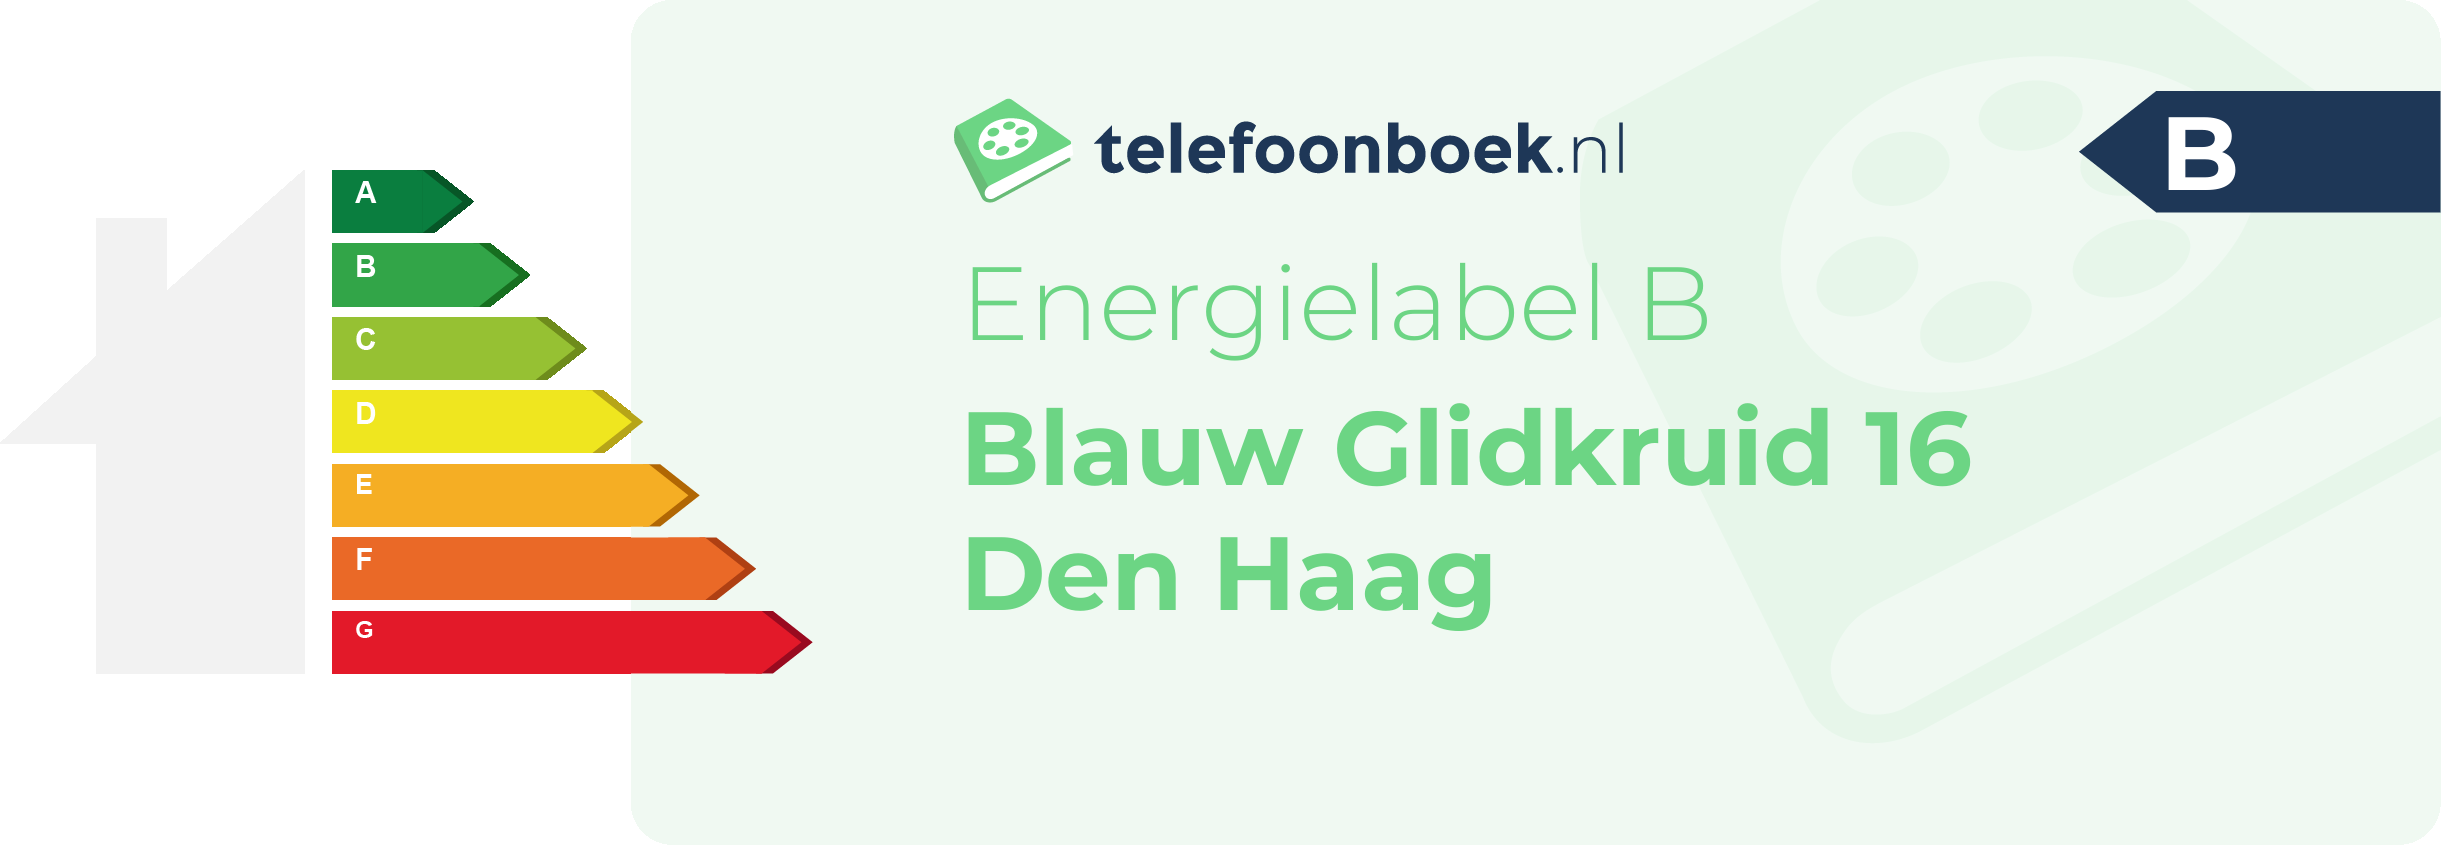 Energielabel Blauw Glidkruid 16 Den Haag